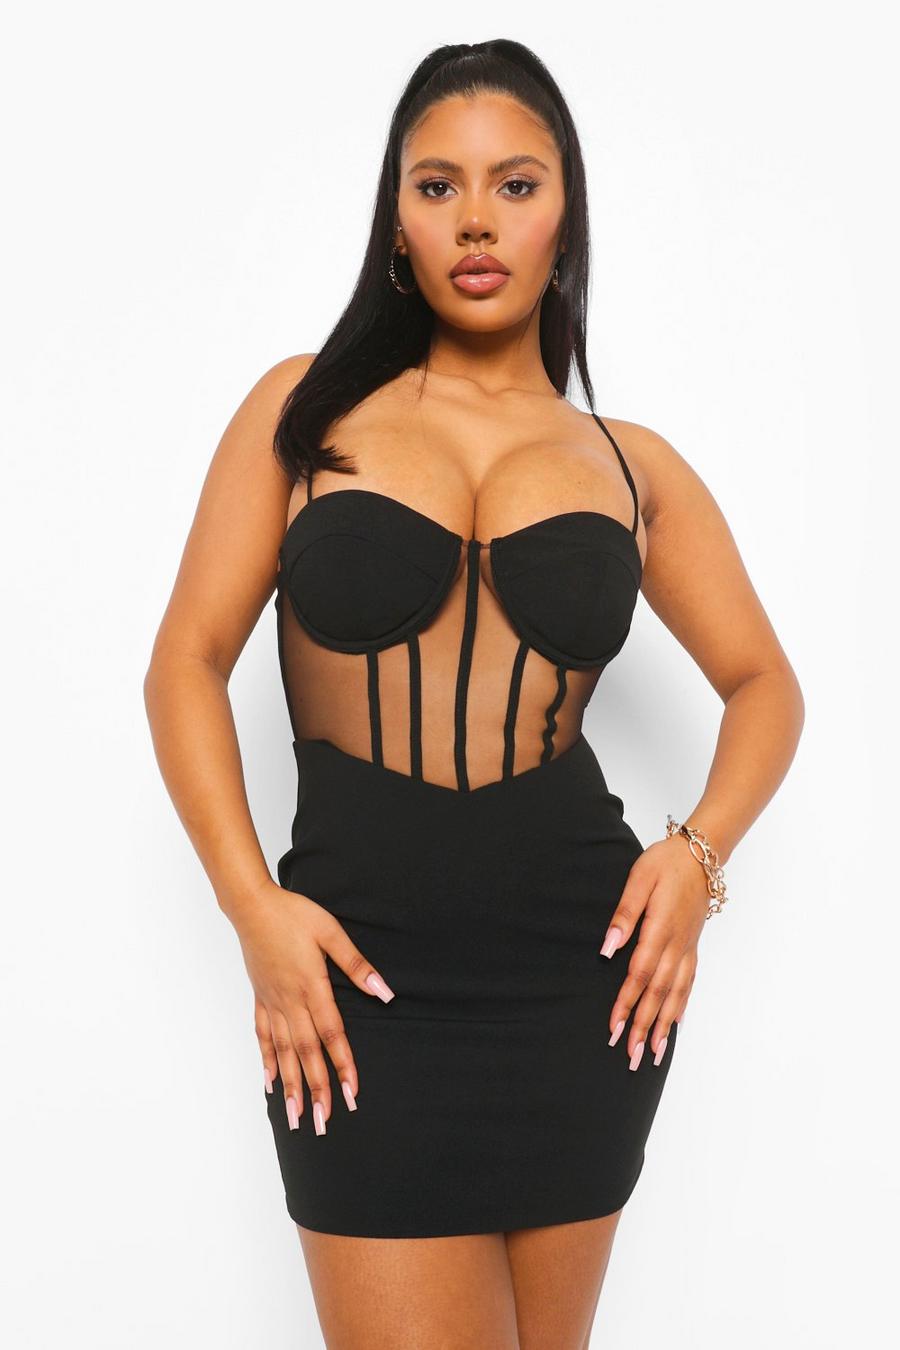 https://media.boohoo.com/i/boohoo/fzz07737_black_xl/female-black-mesh-corset-strappy-mini-dress/?w=900&qlt=default&fmt.jp2.qlt=70&fmt=auto&sm=fit